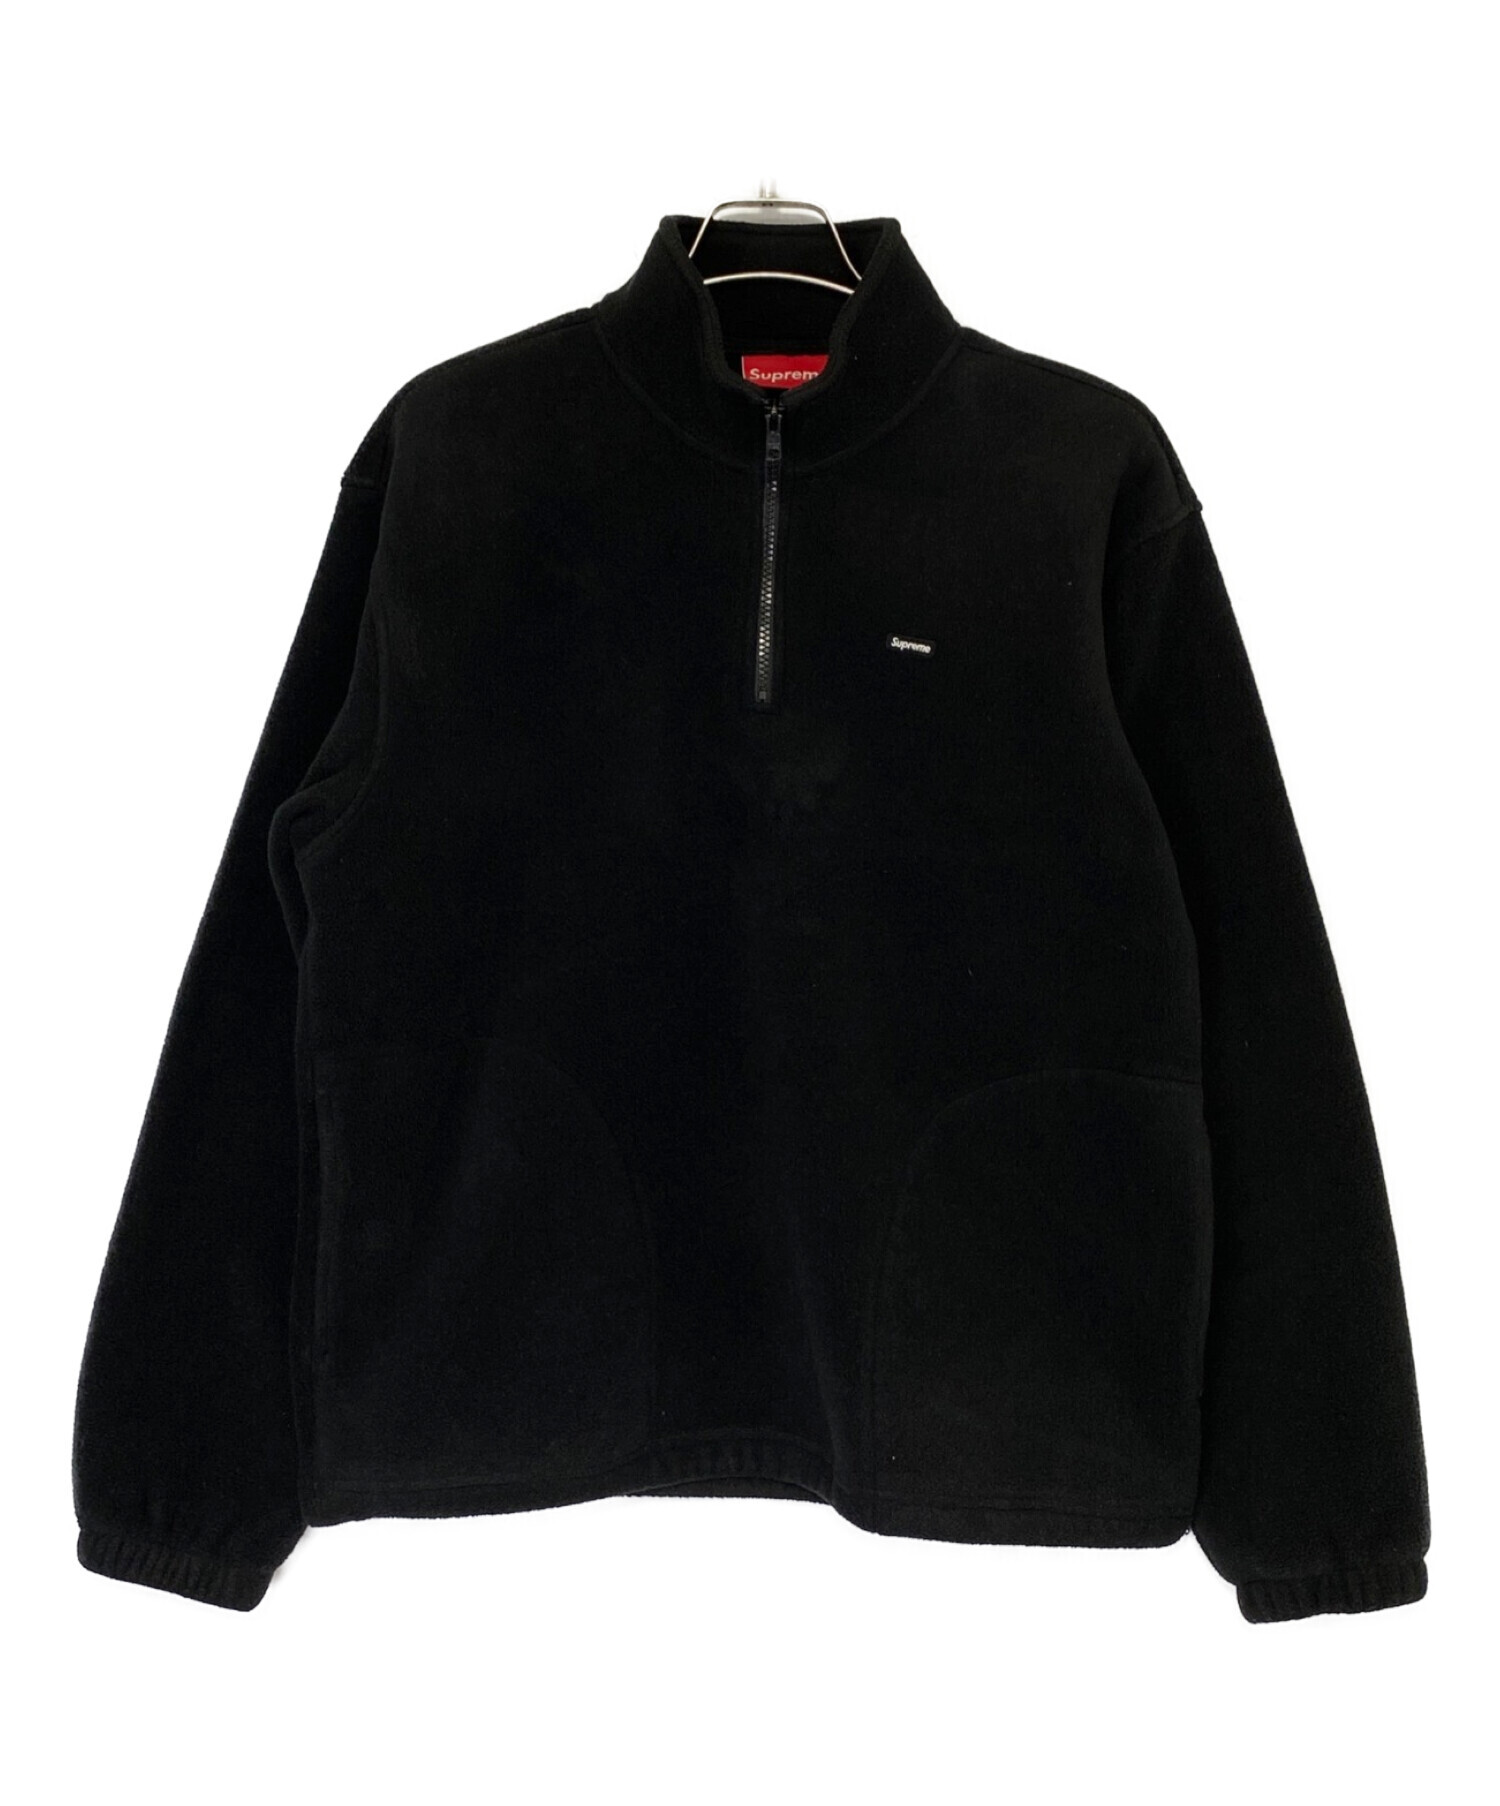 Supreme Polartec Half Zip Pullover Black